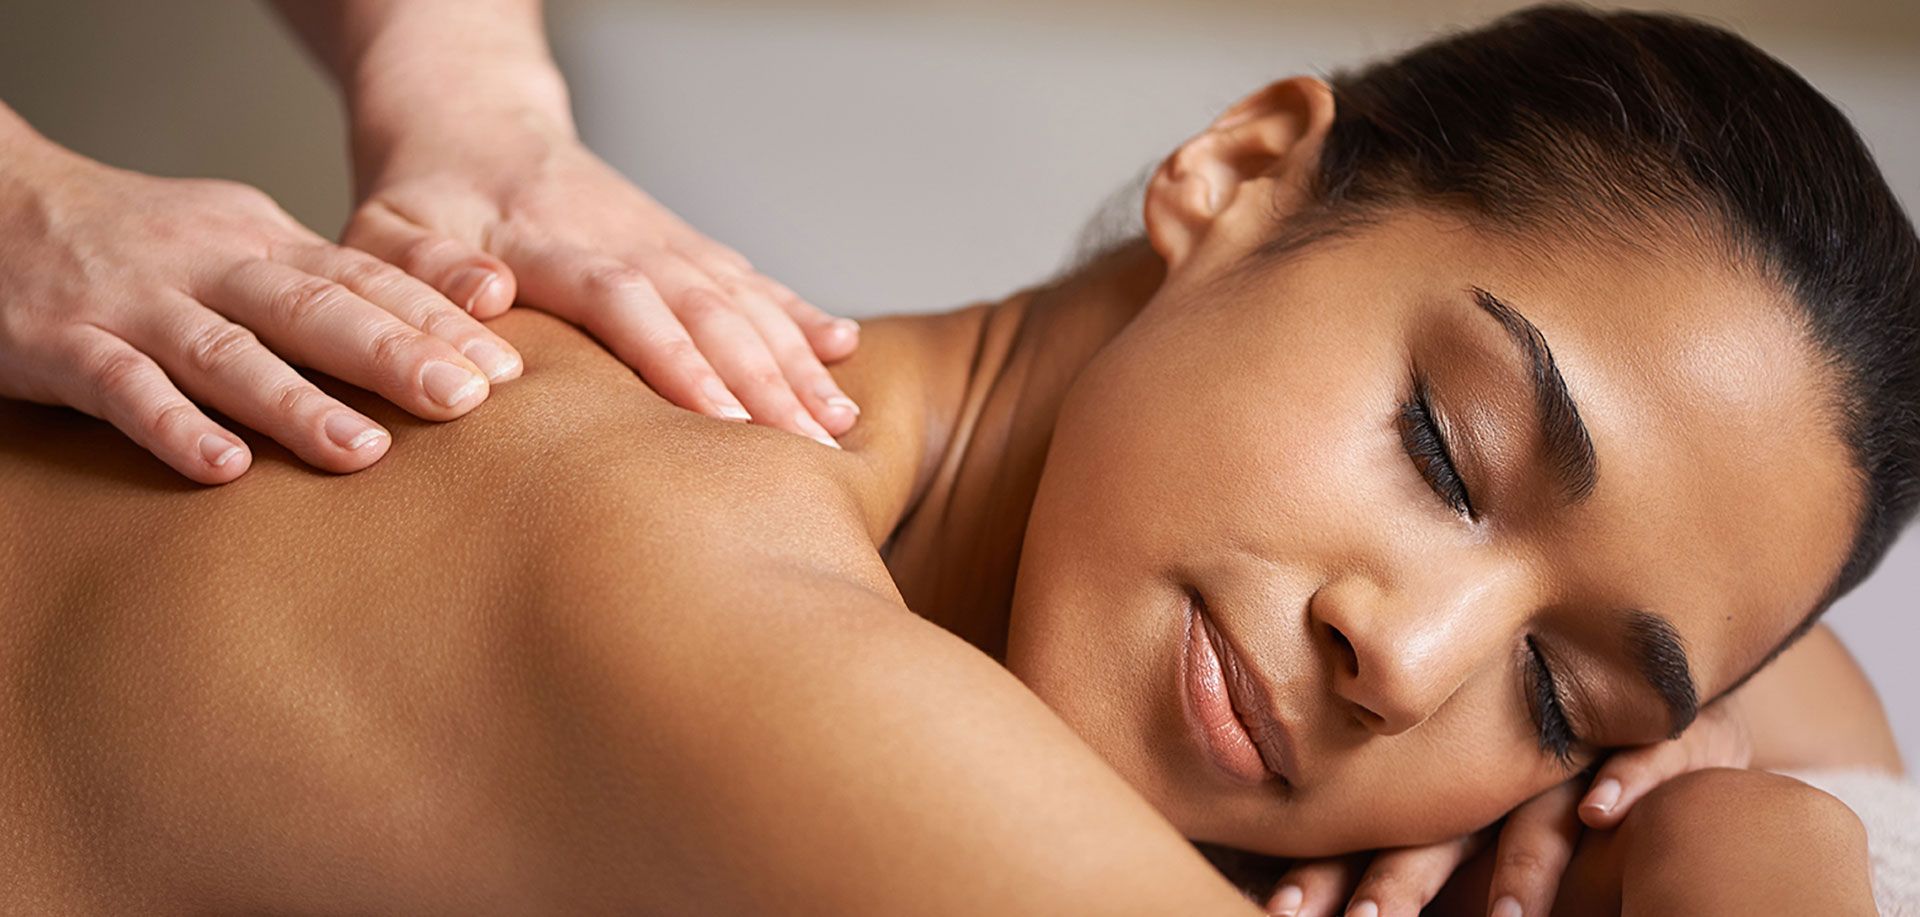 Spa Massage Toronto - Massage Services | Elmwood Spa